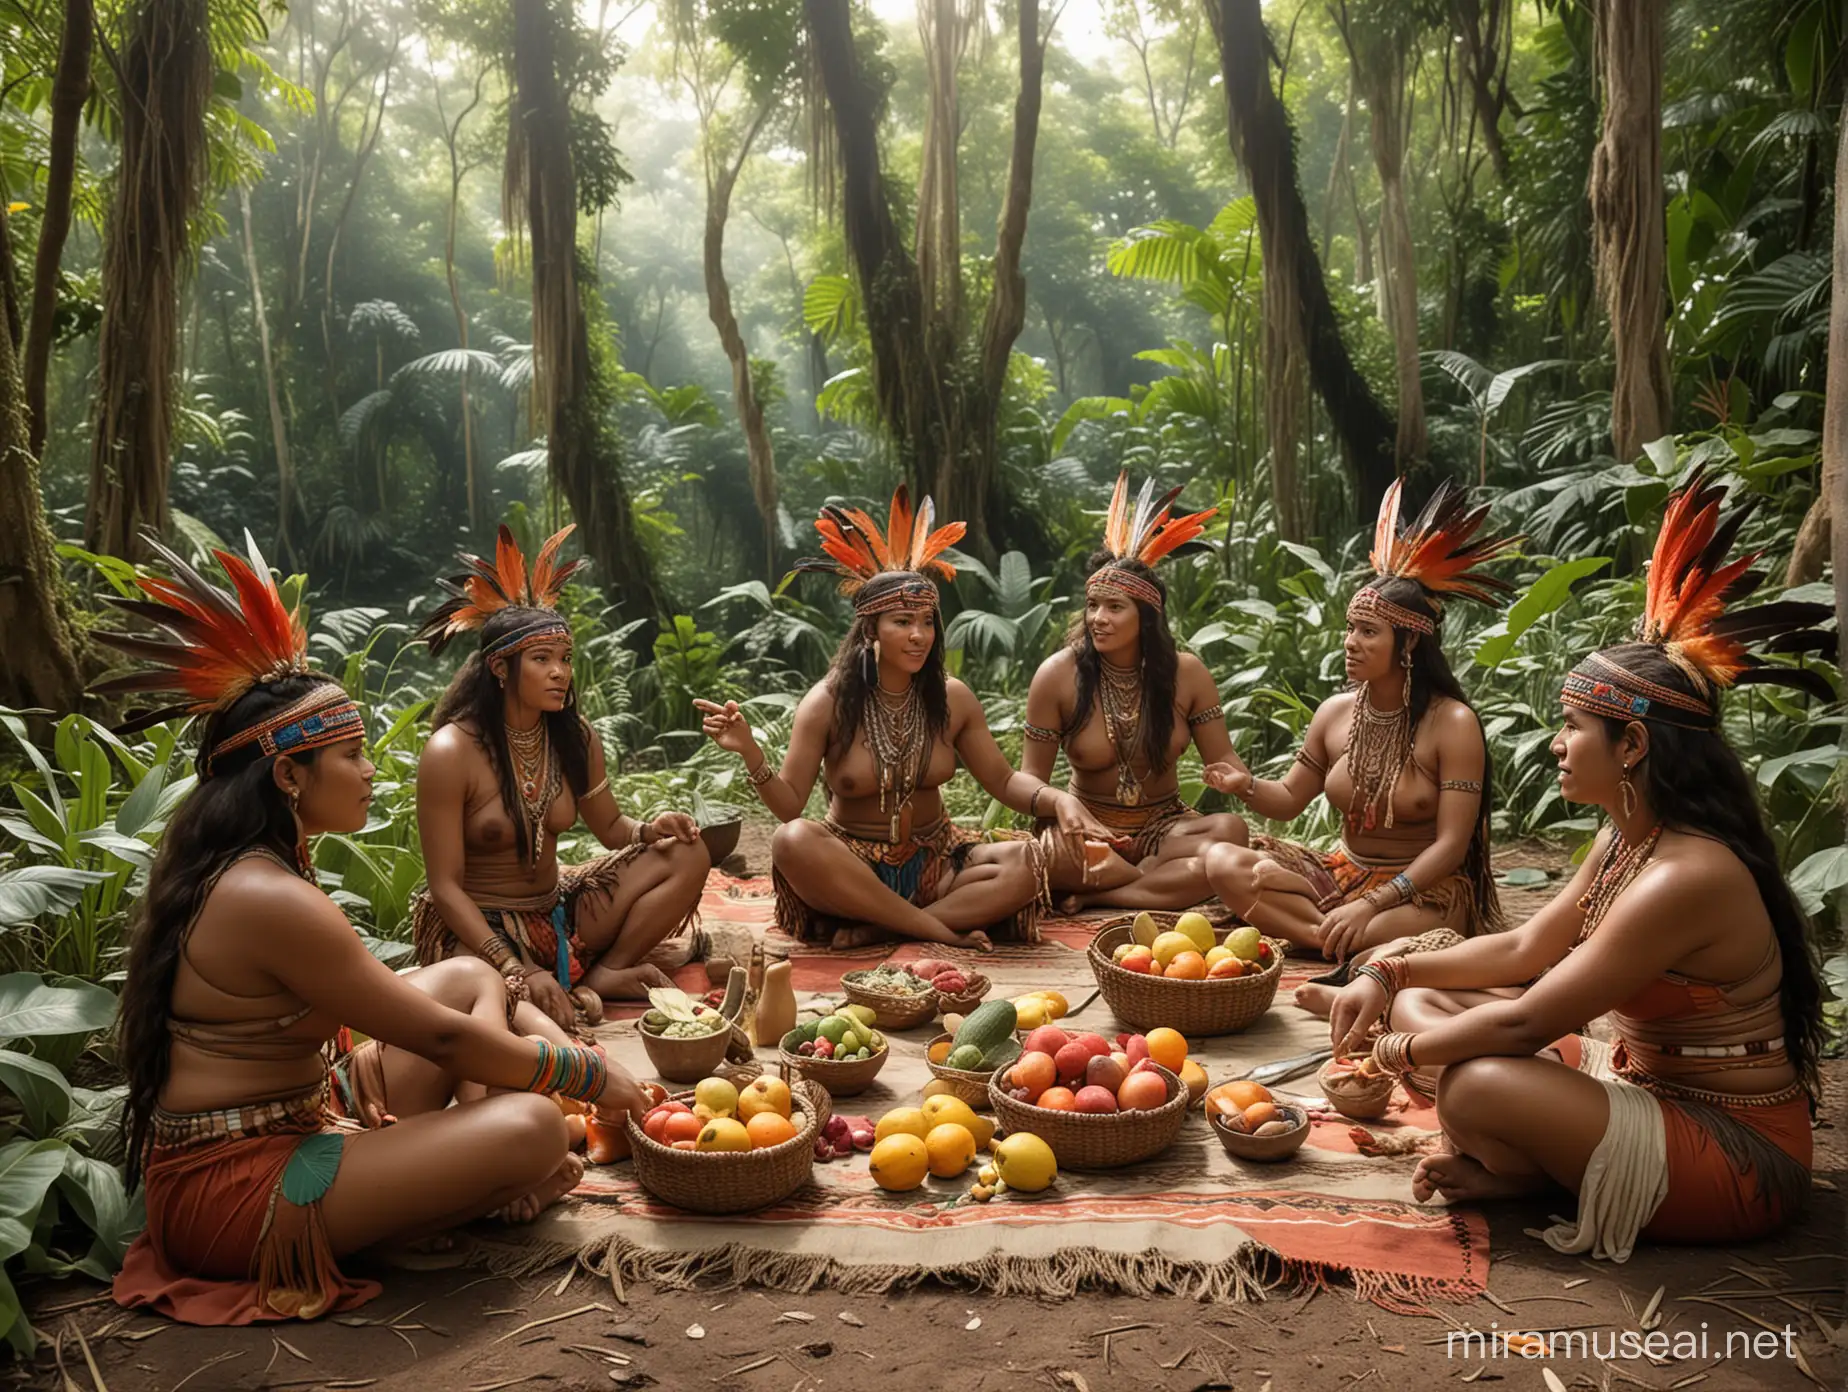 Warrior Amazon Women Enjoying a Tropical Picnic in the Rainforest